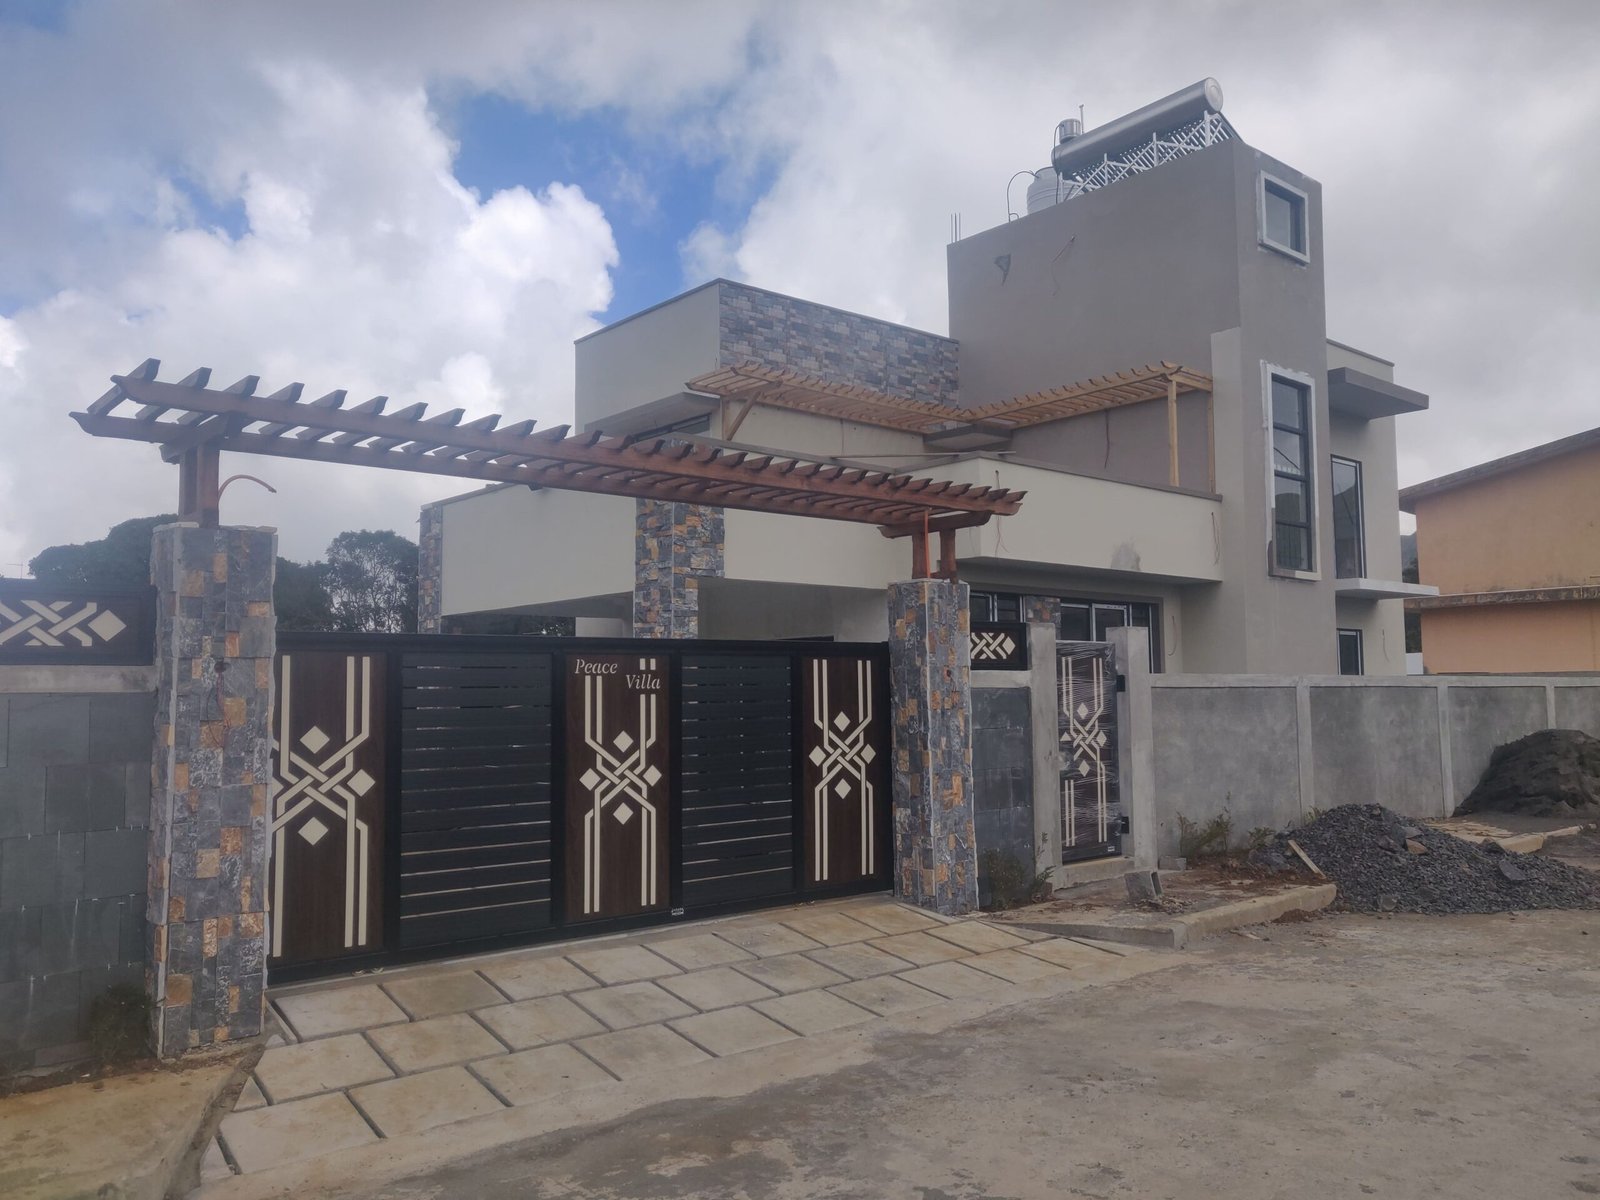 House for sale at Gentilly – Chantenay, MOKA